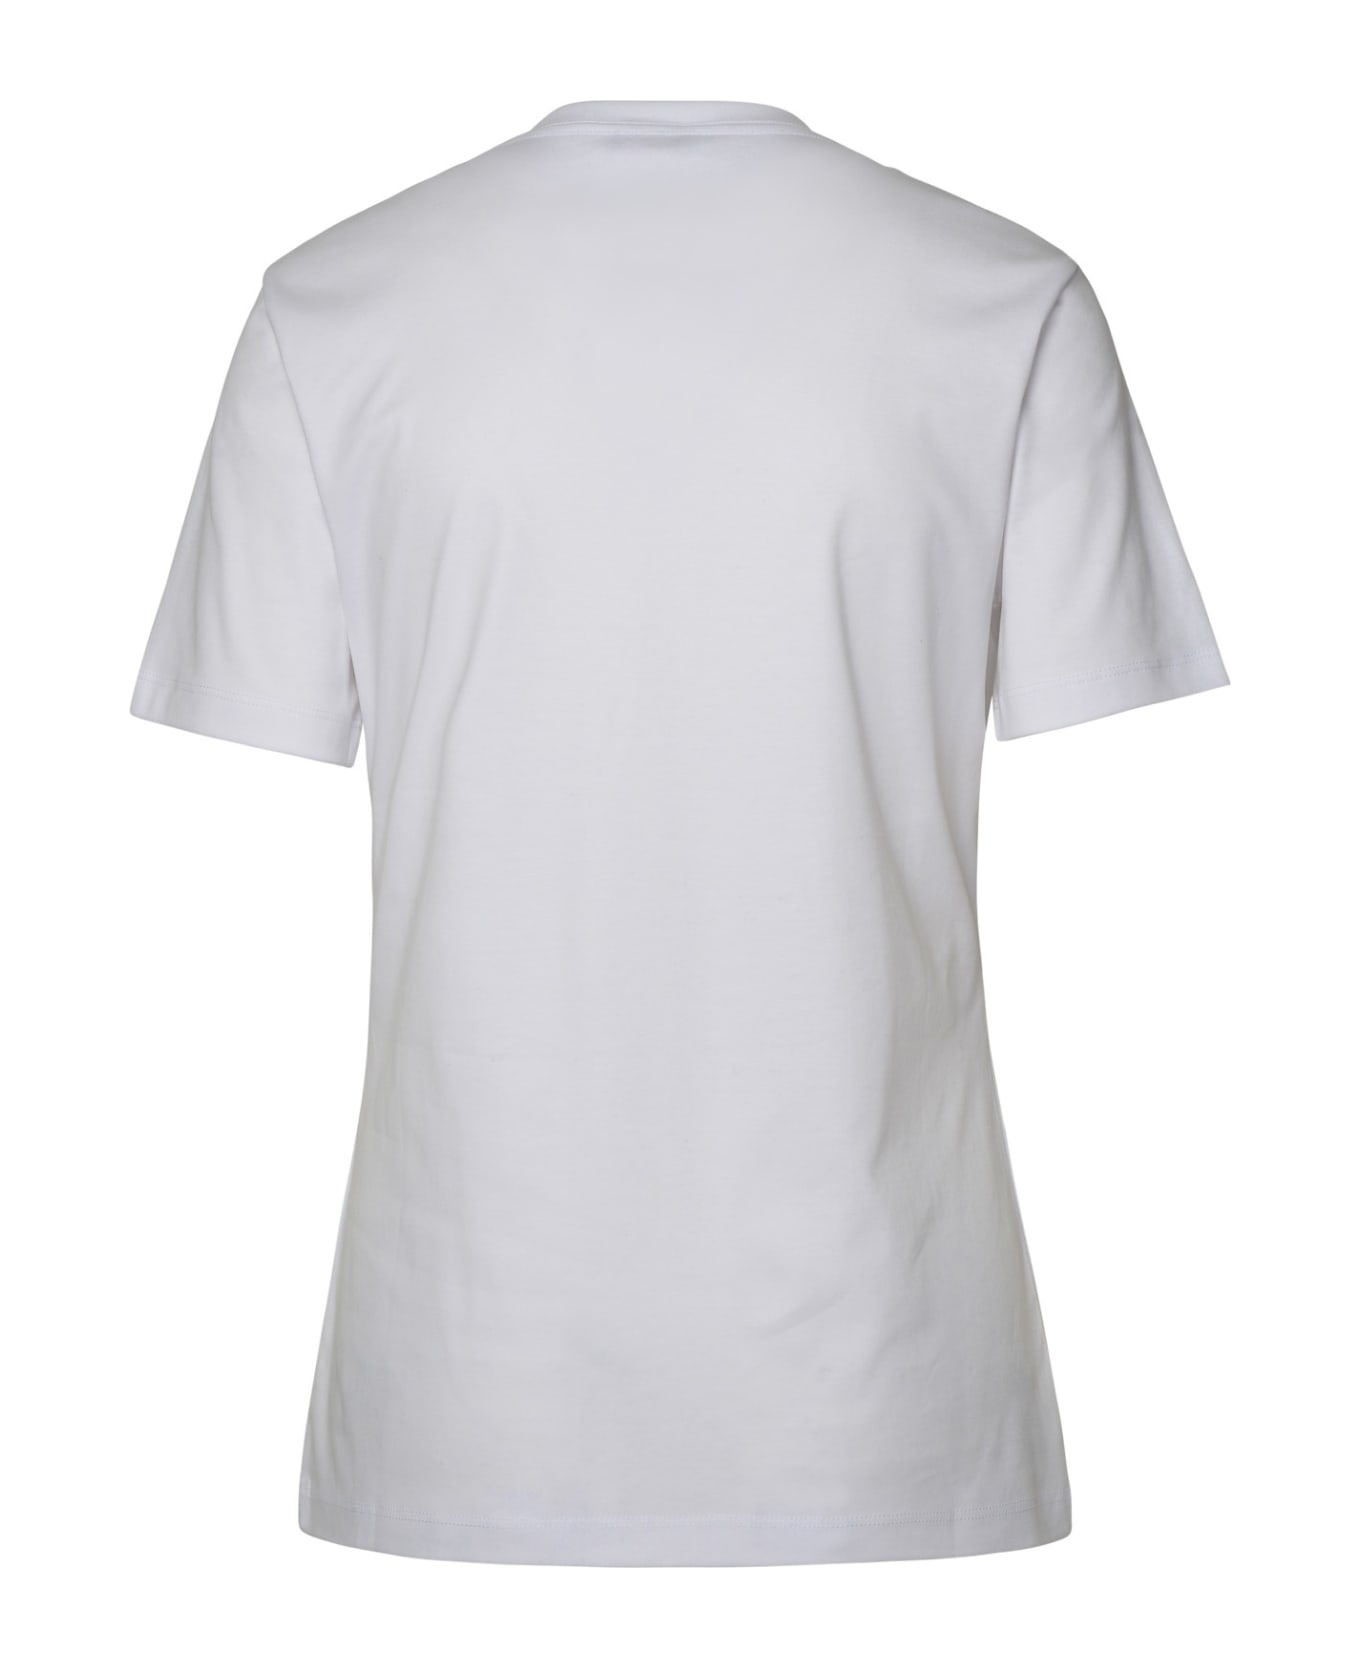 Versace Medusa White closer T-shirt - White